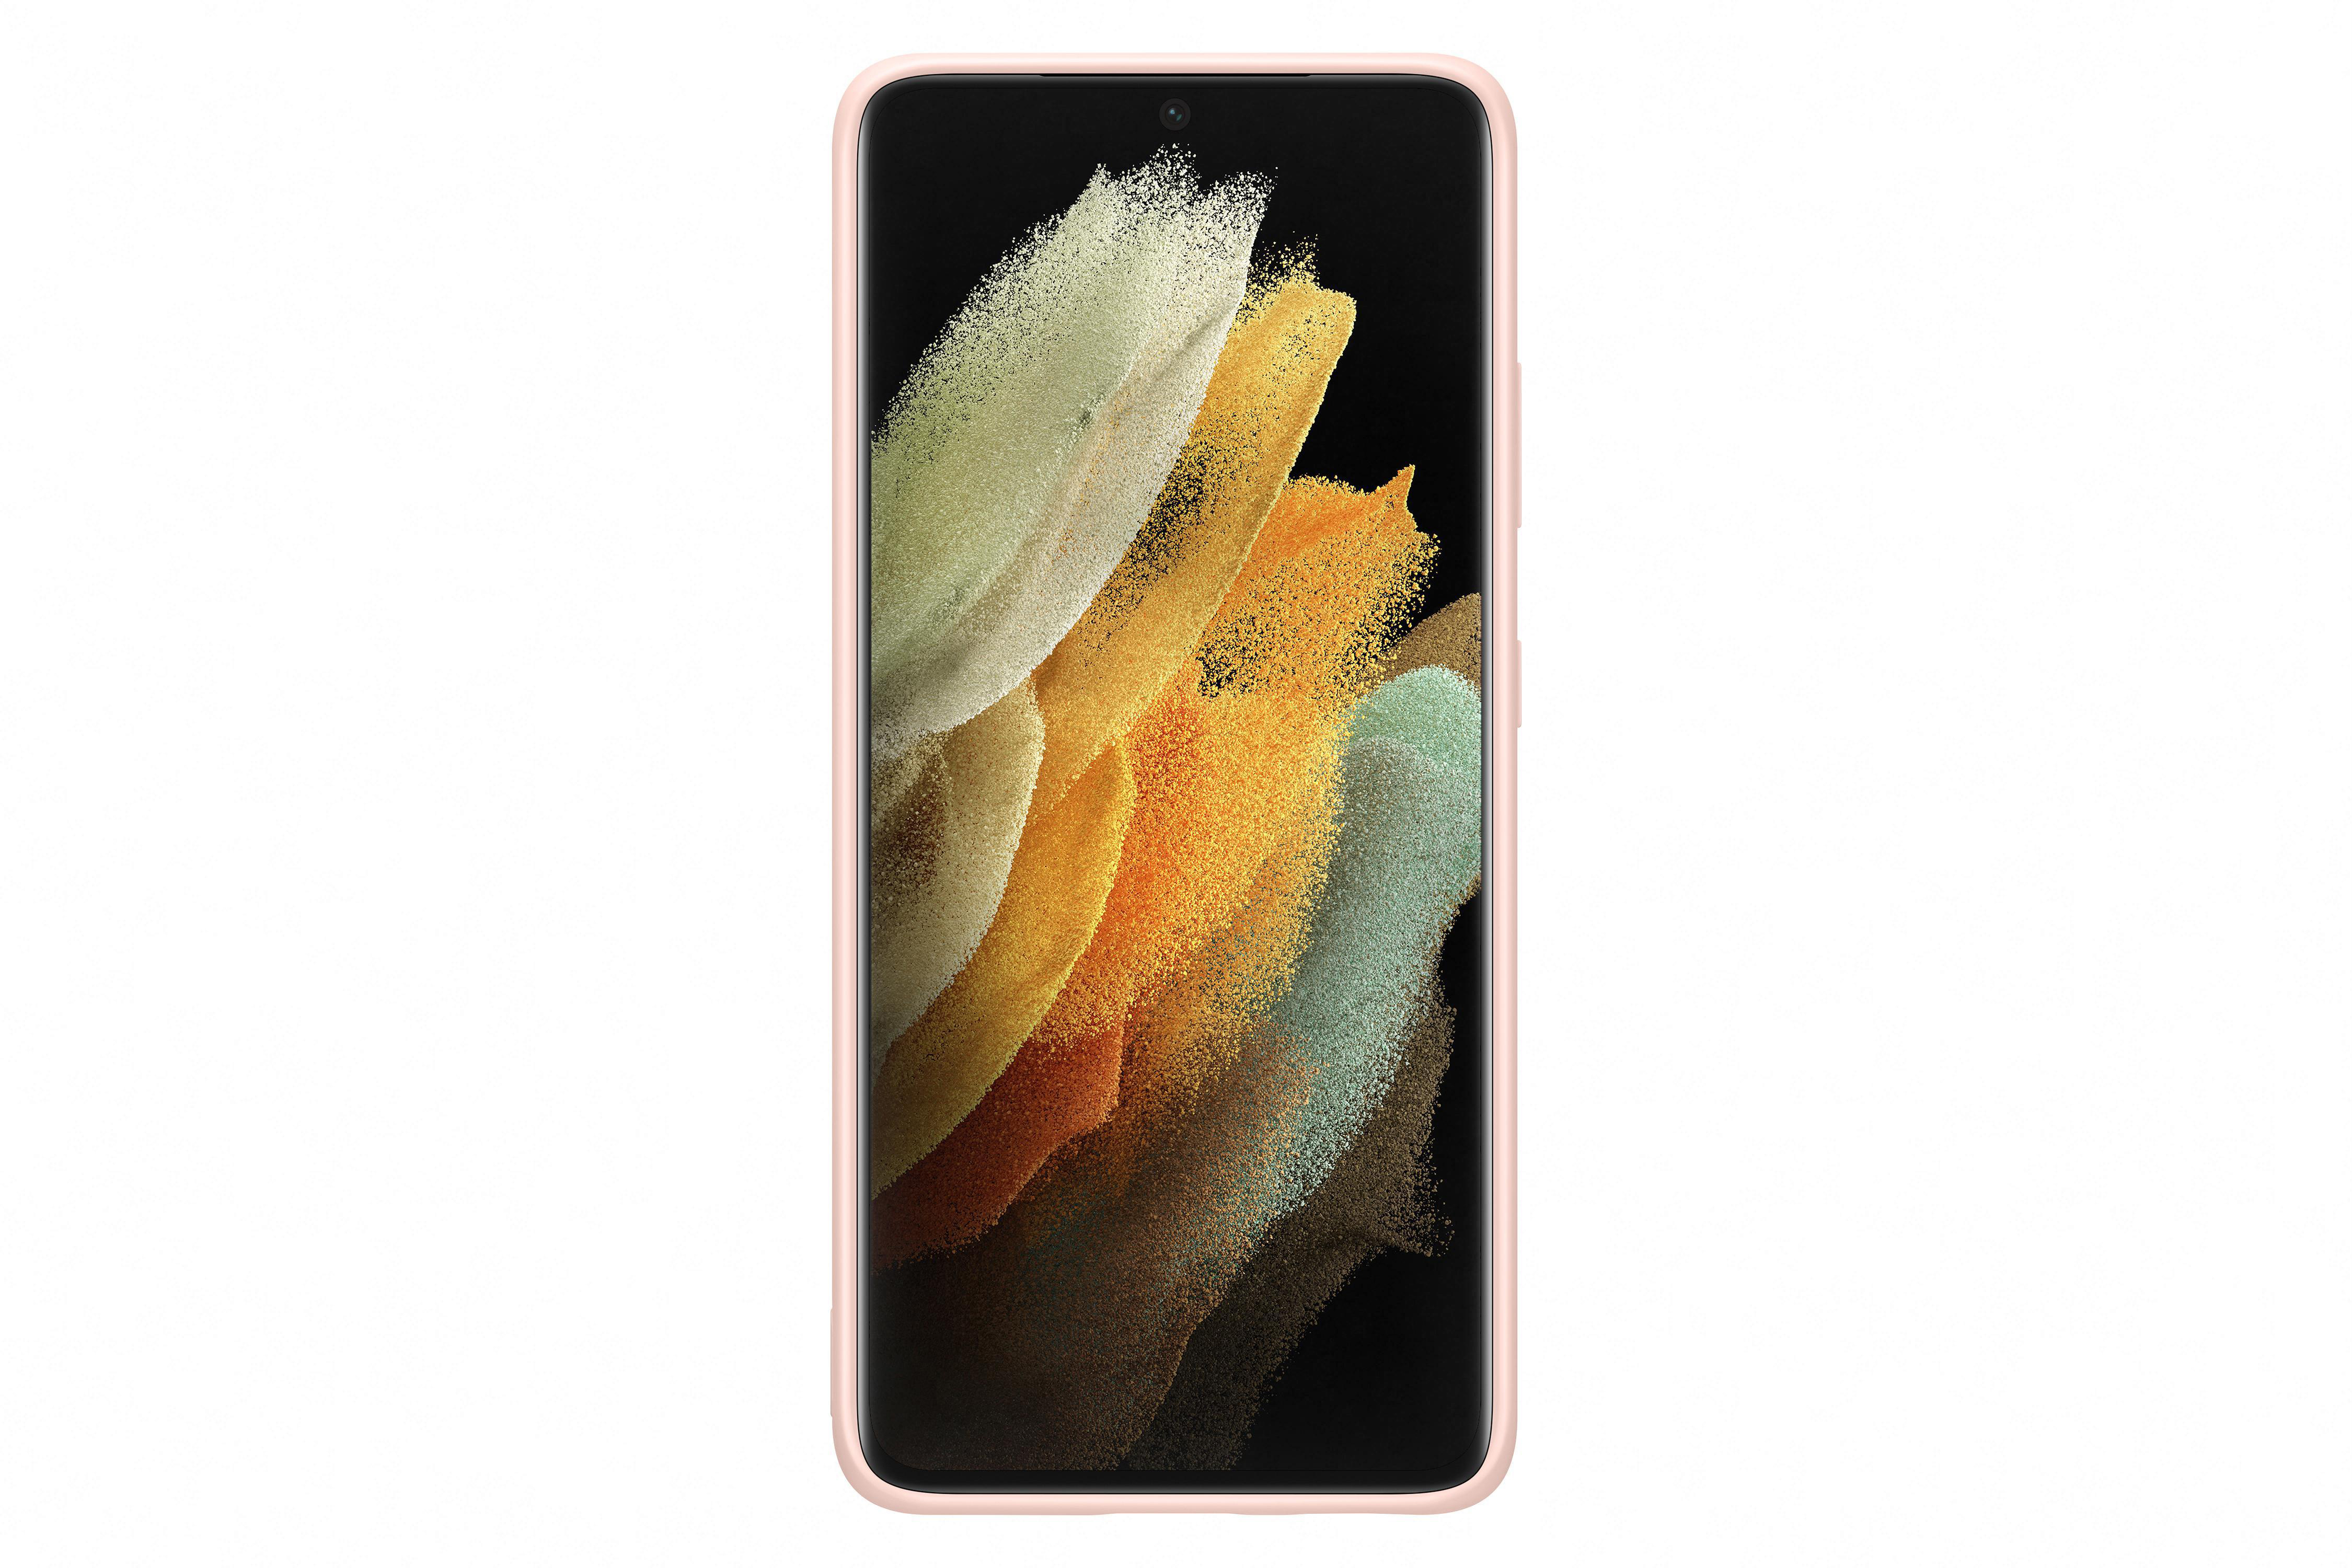 Pink Backcover, EF-PG998, S21 Samsung, Galaxy 5G, SAMSUNG Ultra